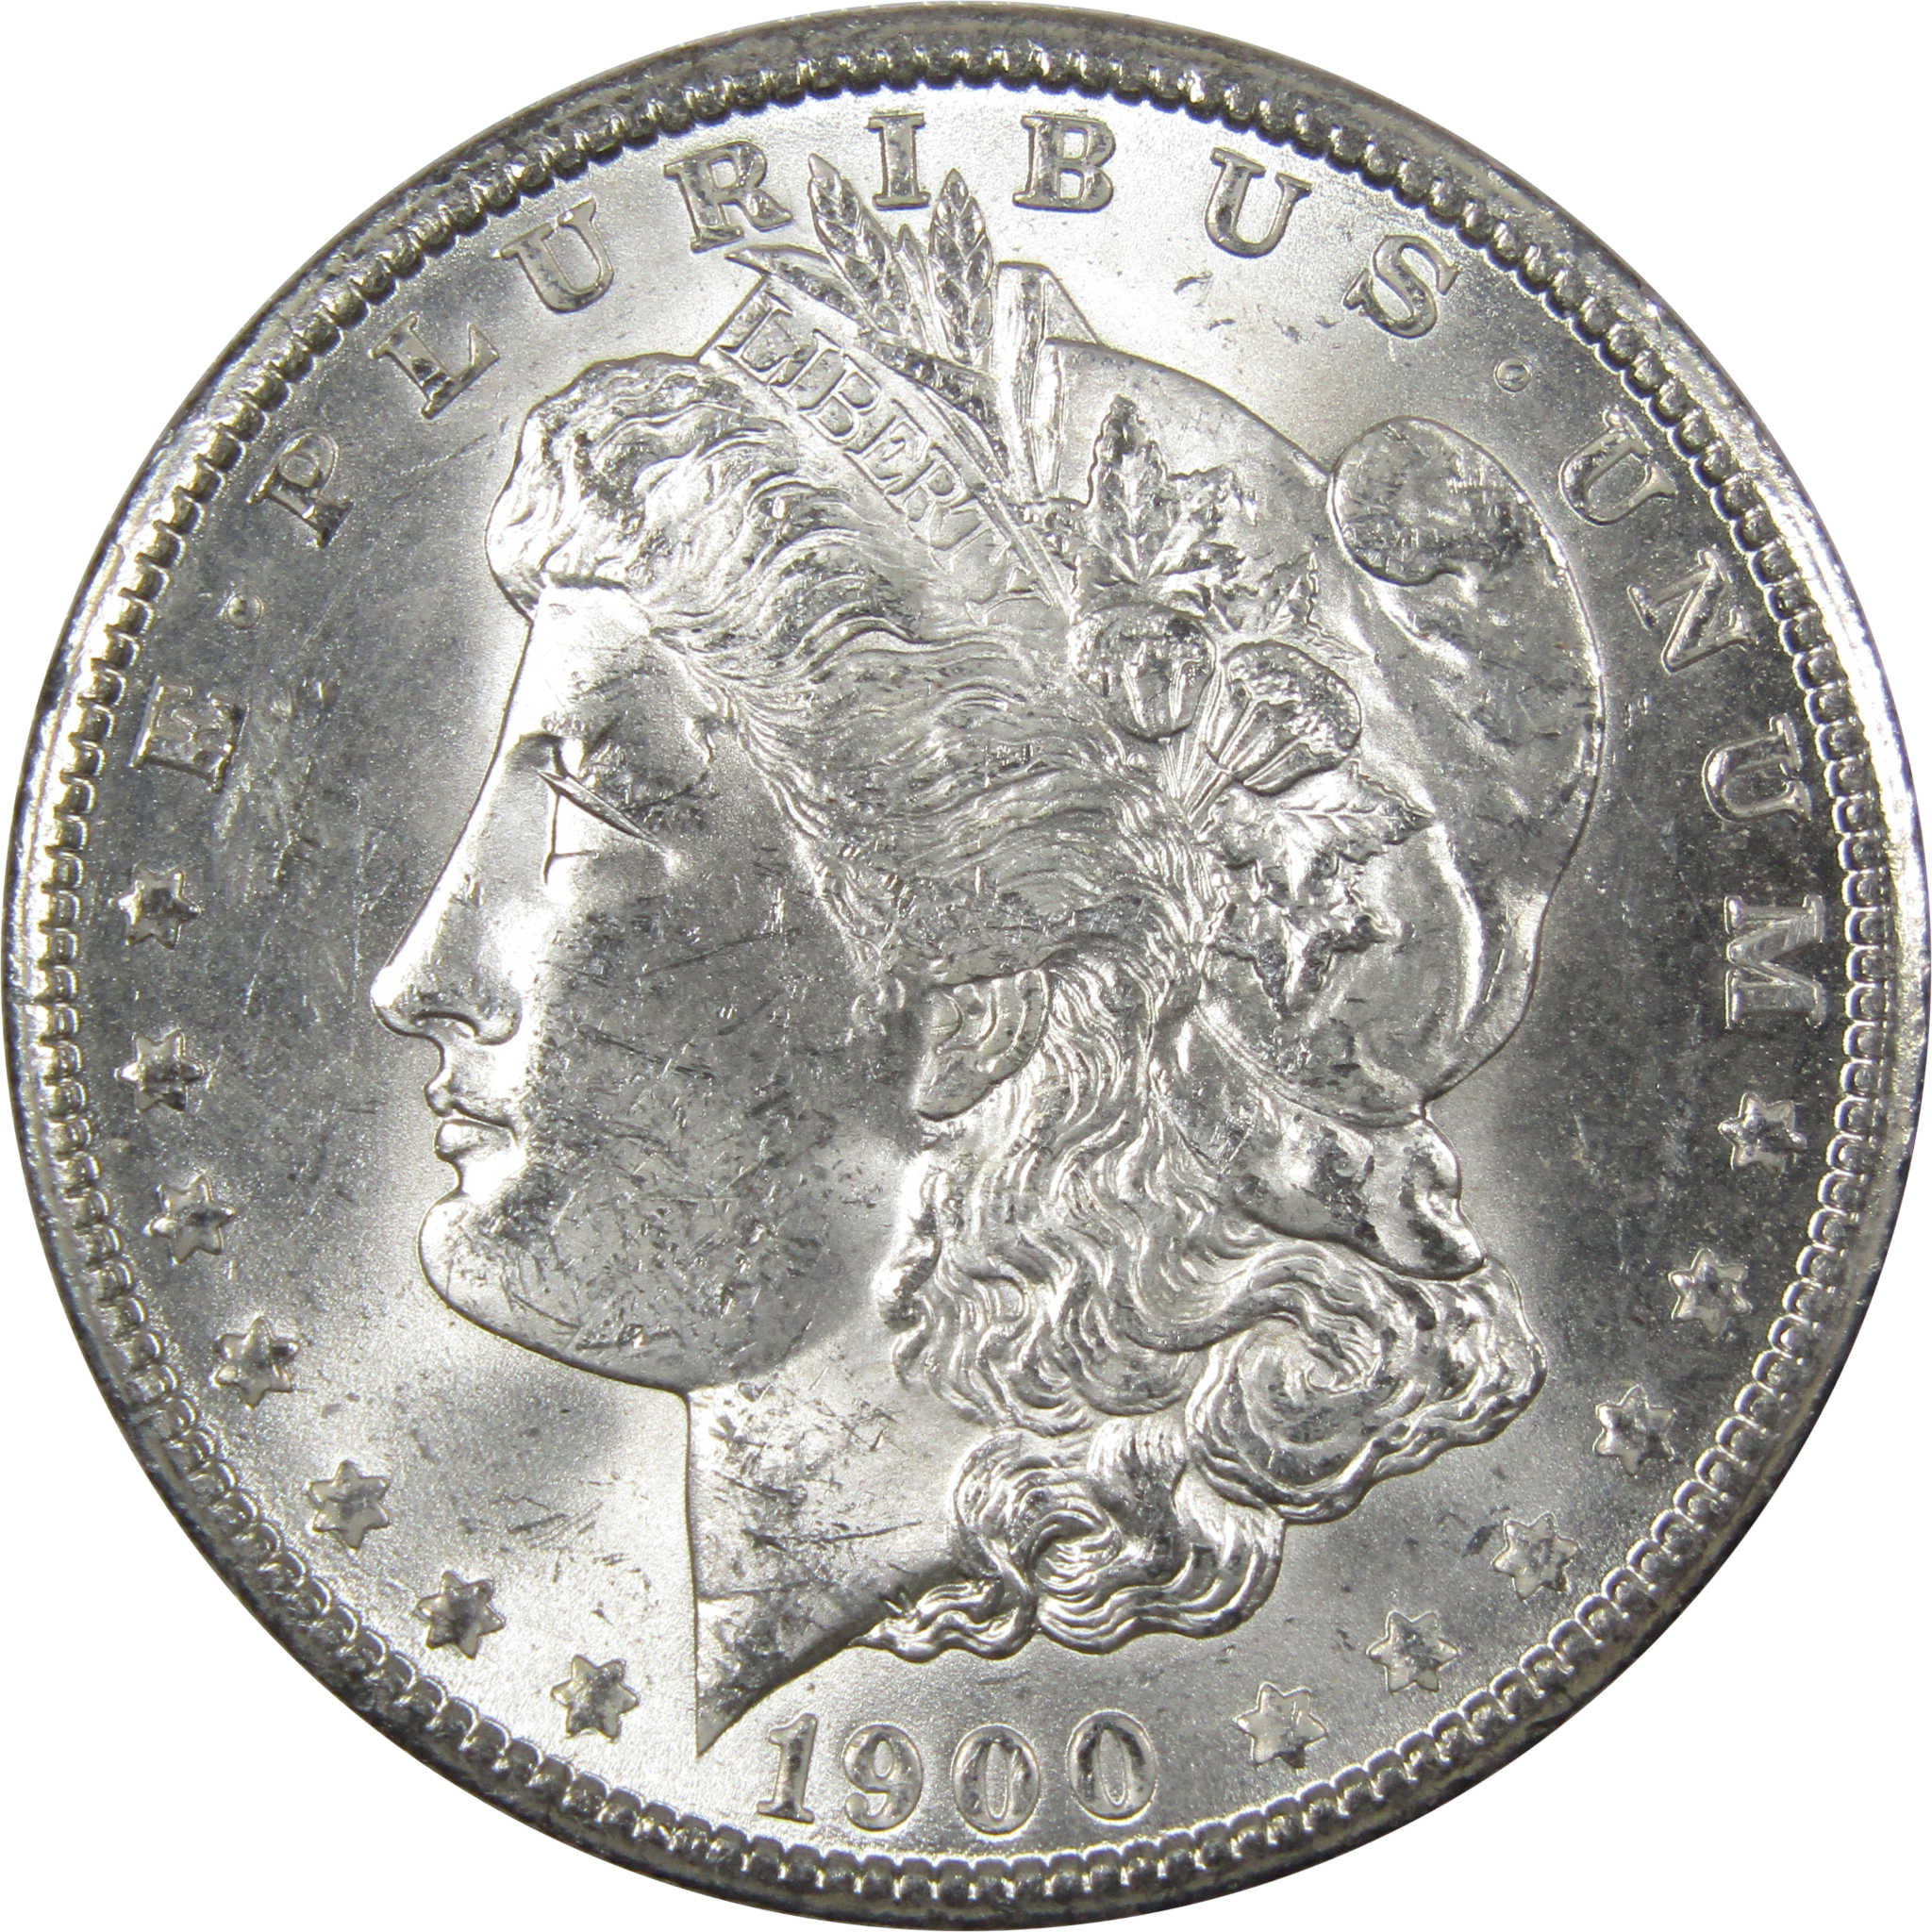 1900 O Morgan Dollar BU Uncirculated Mint State 90% Silver SKU:IPC9756 - Morgan coin - Morgan silver dollar - Morgan silver dollar for sale - Profile Coins &amp; Collectibles